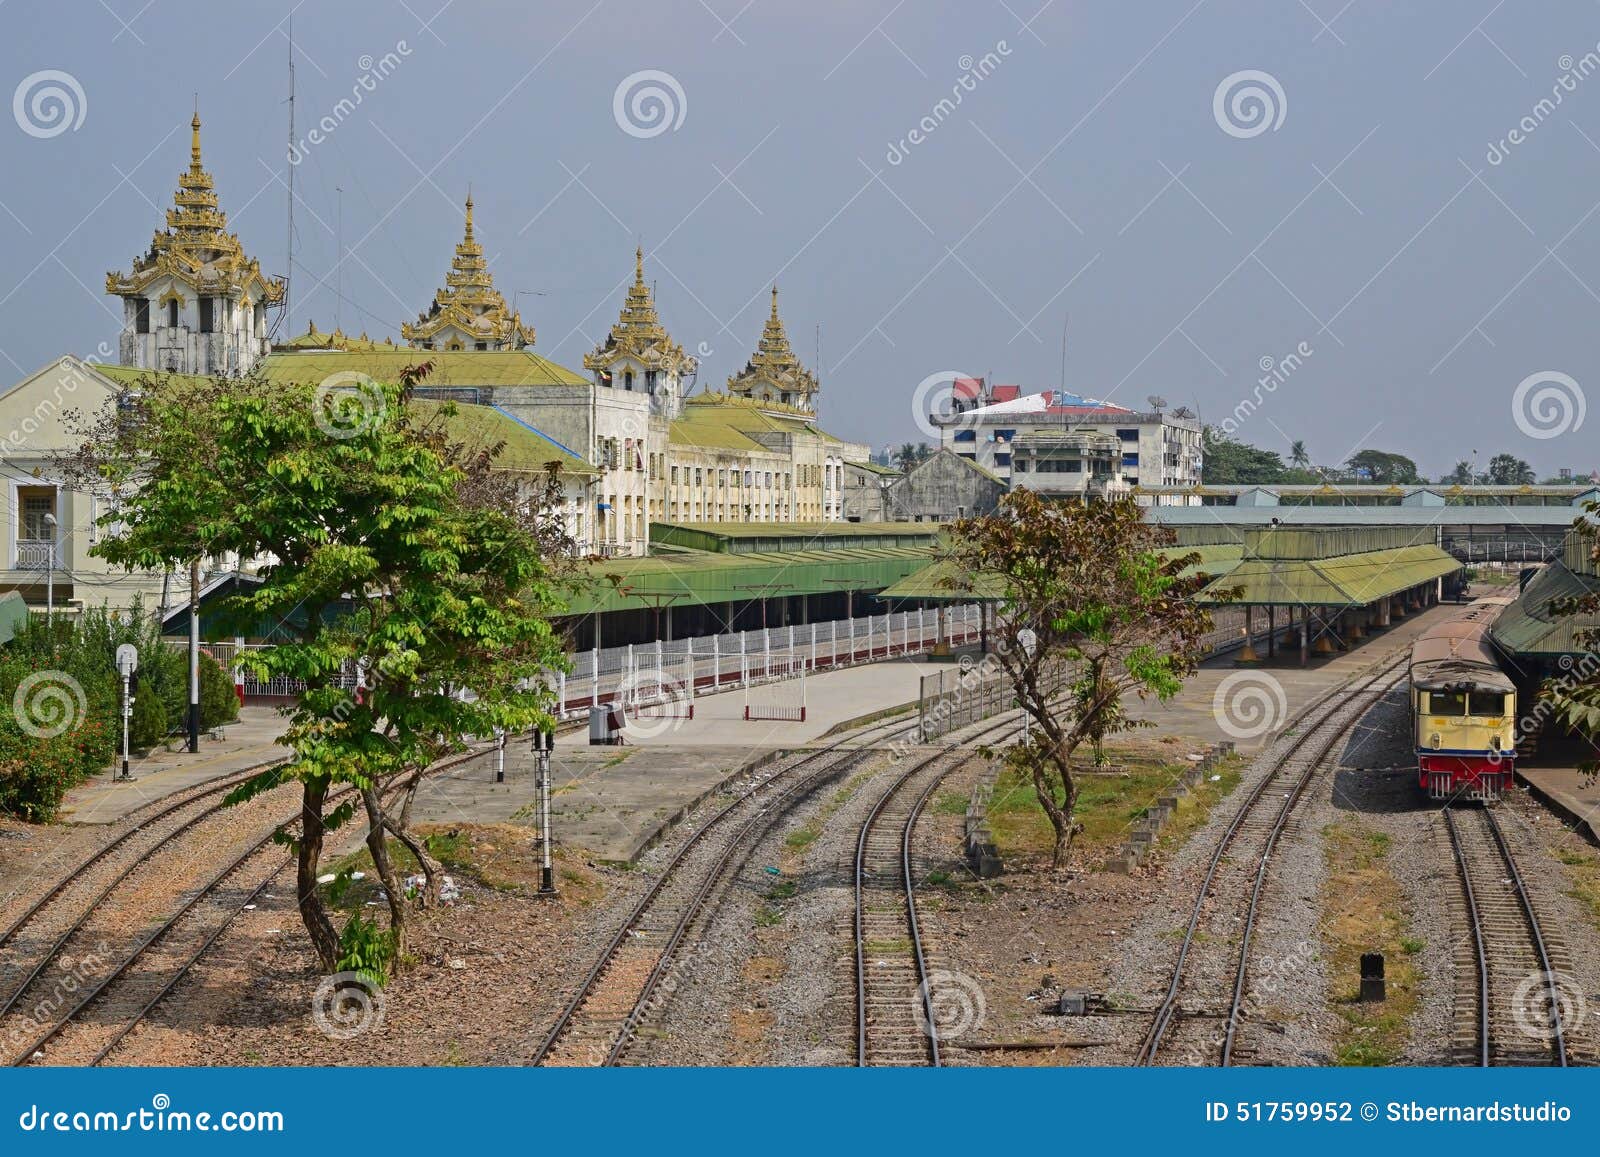 multiple railway tracks behind yangon central railway station